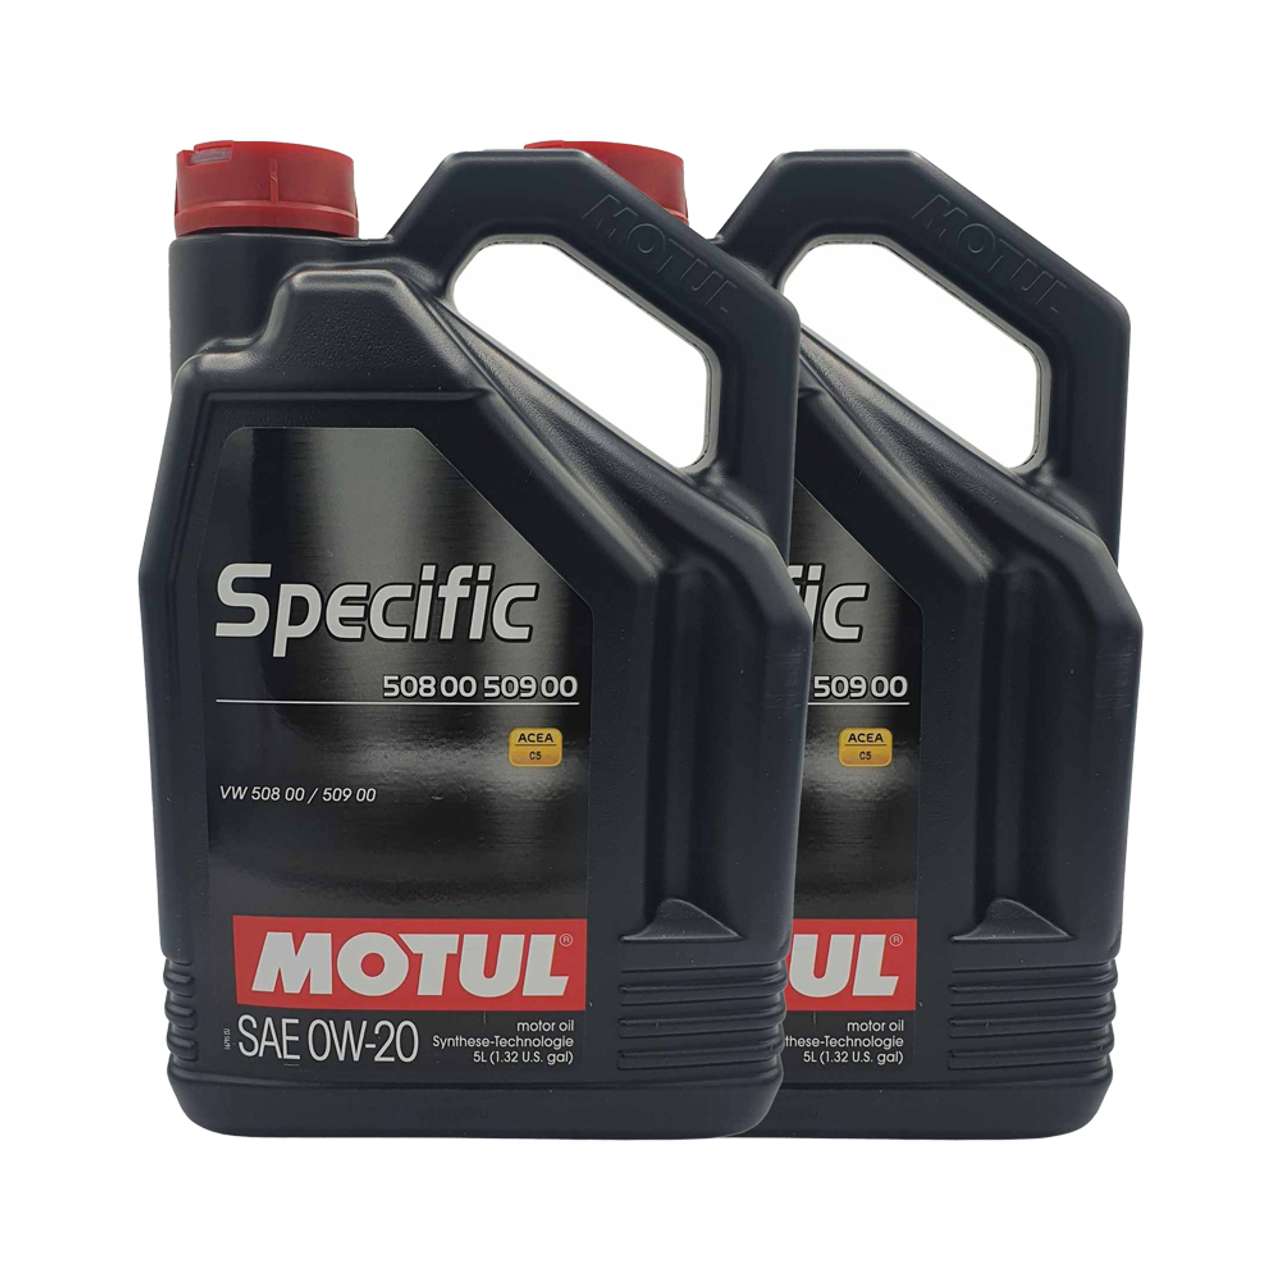 Motul Specific 508 00 - 509 00 0W-20 2x5 Liter